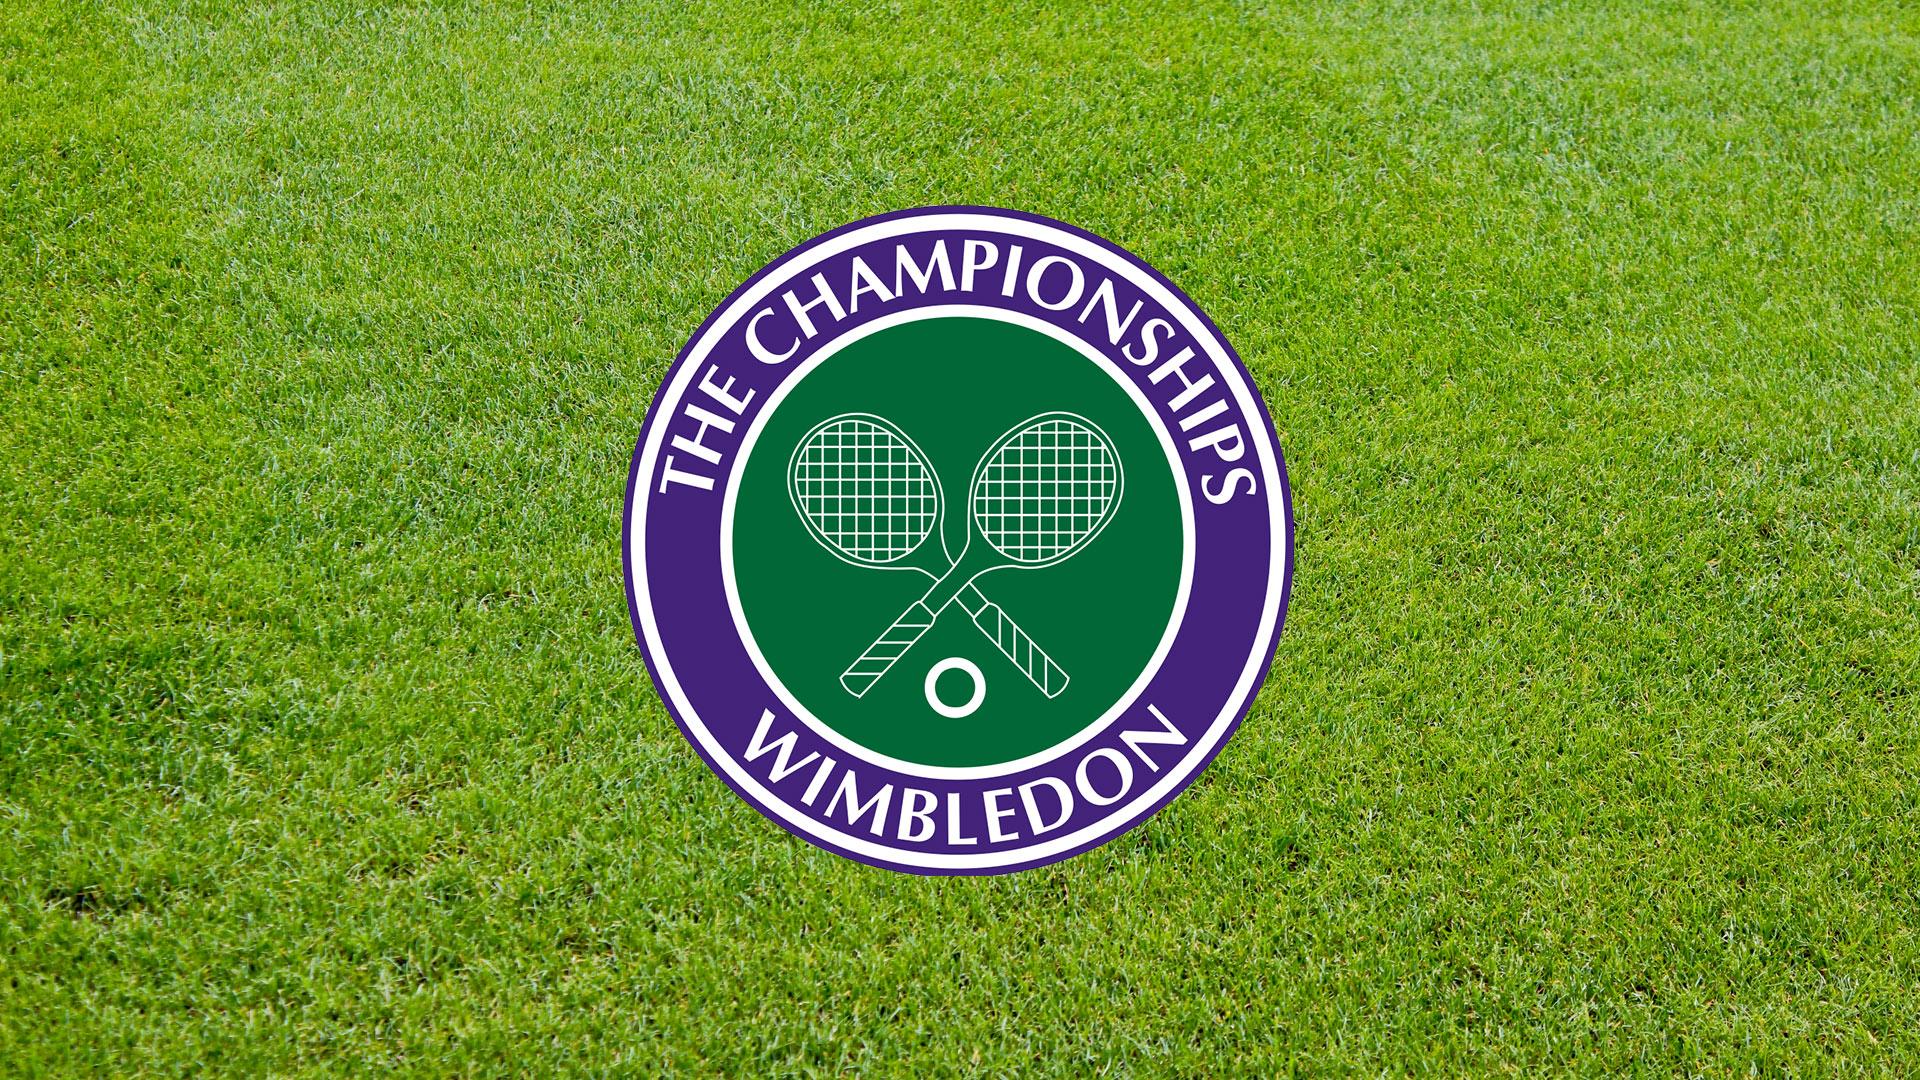 Wimbledon-kampe i søgelyset for matchfixing